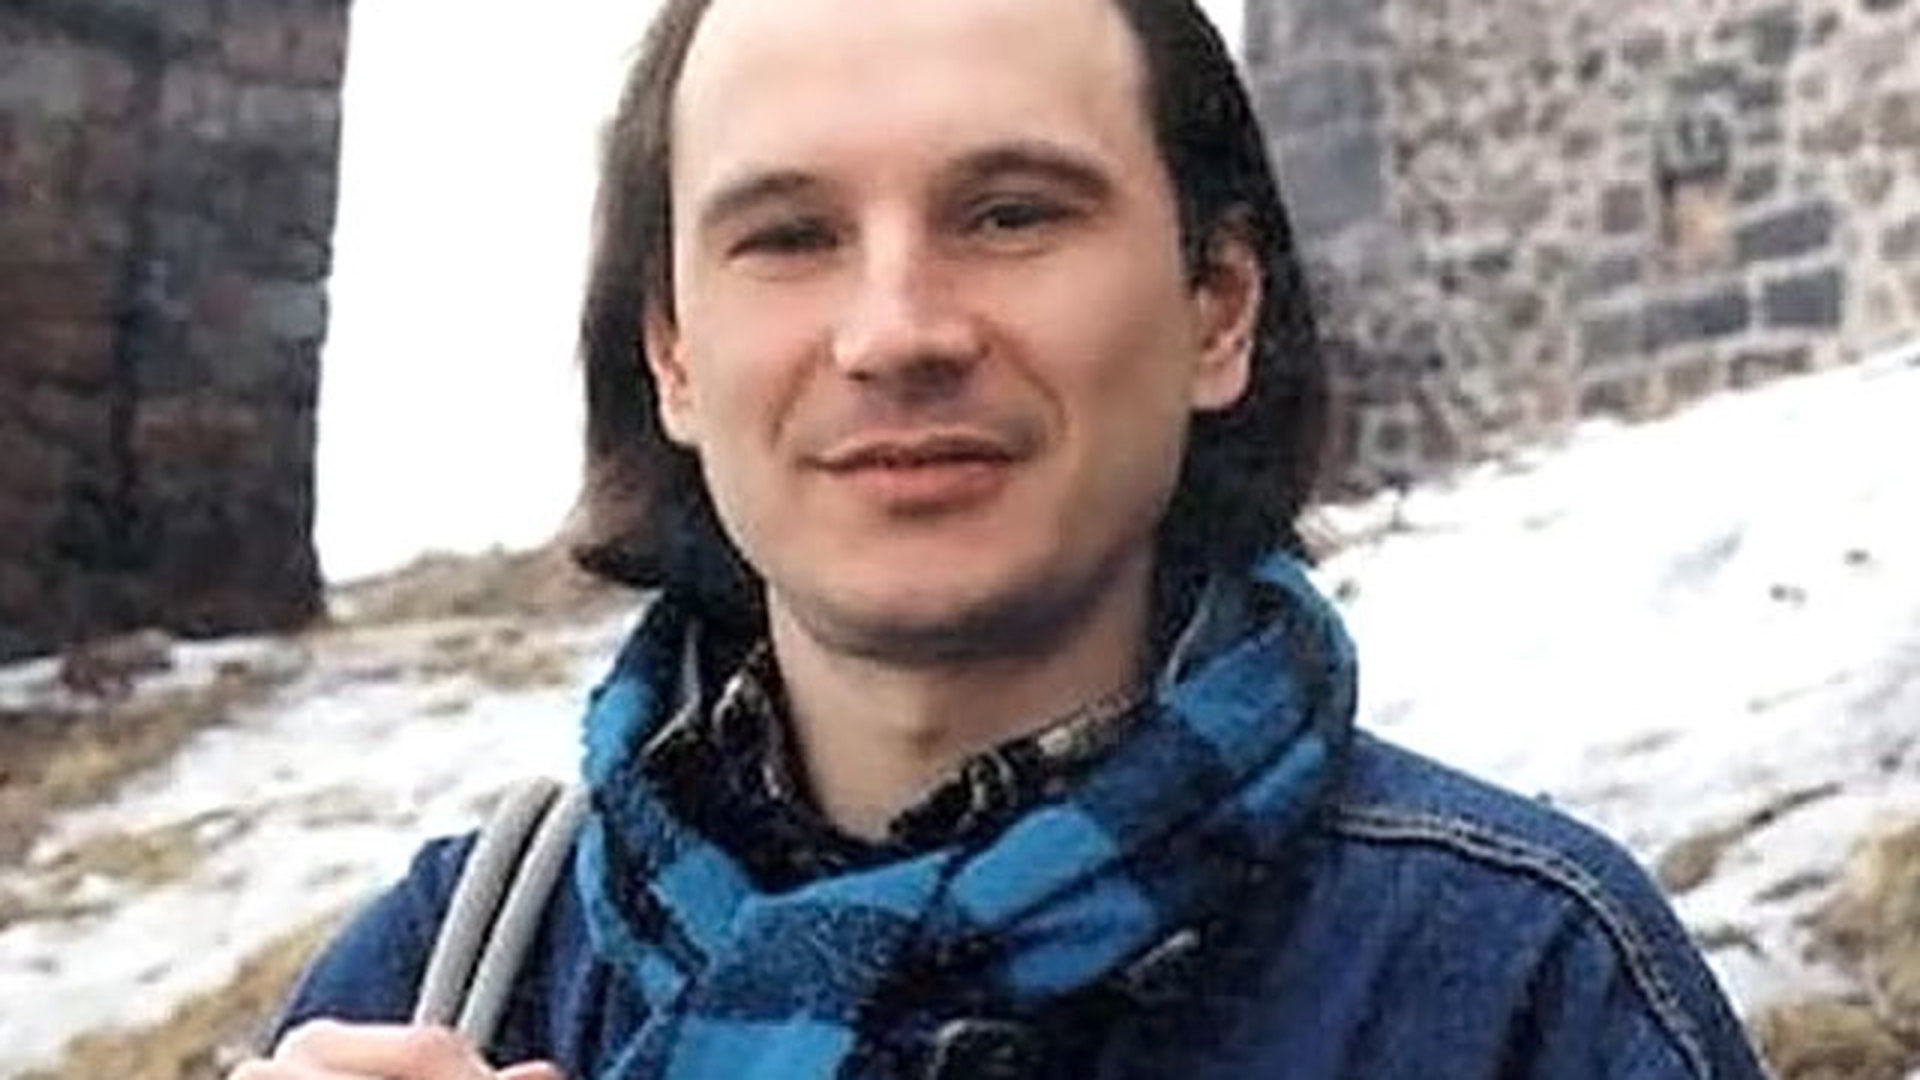 Алексей балабанов фото в молодости